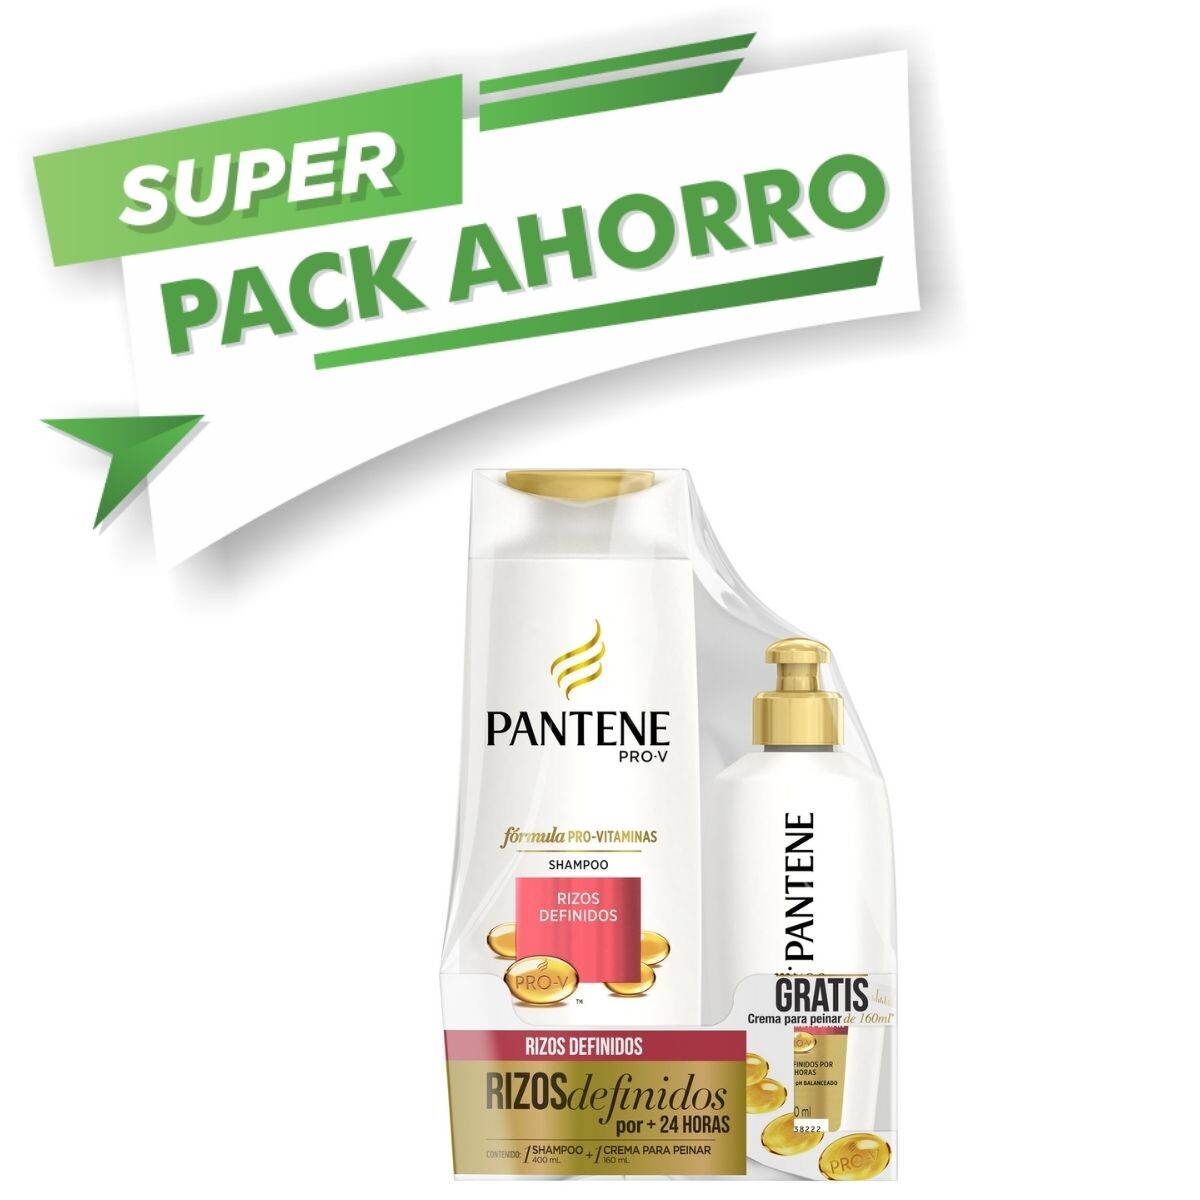 Shampoo Pantene Rizos Definidos - Pack Ahorro 400ML + CPP 160ML 